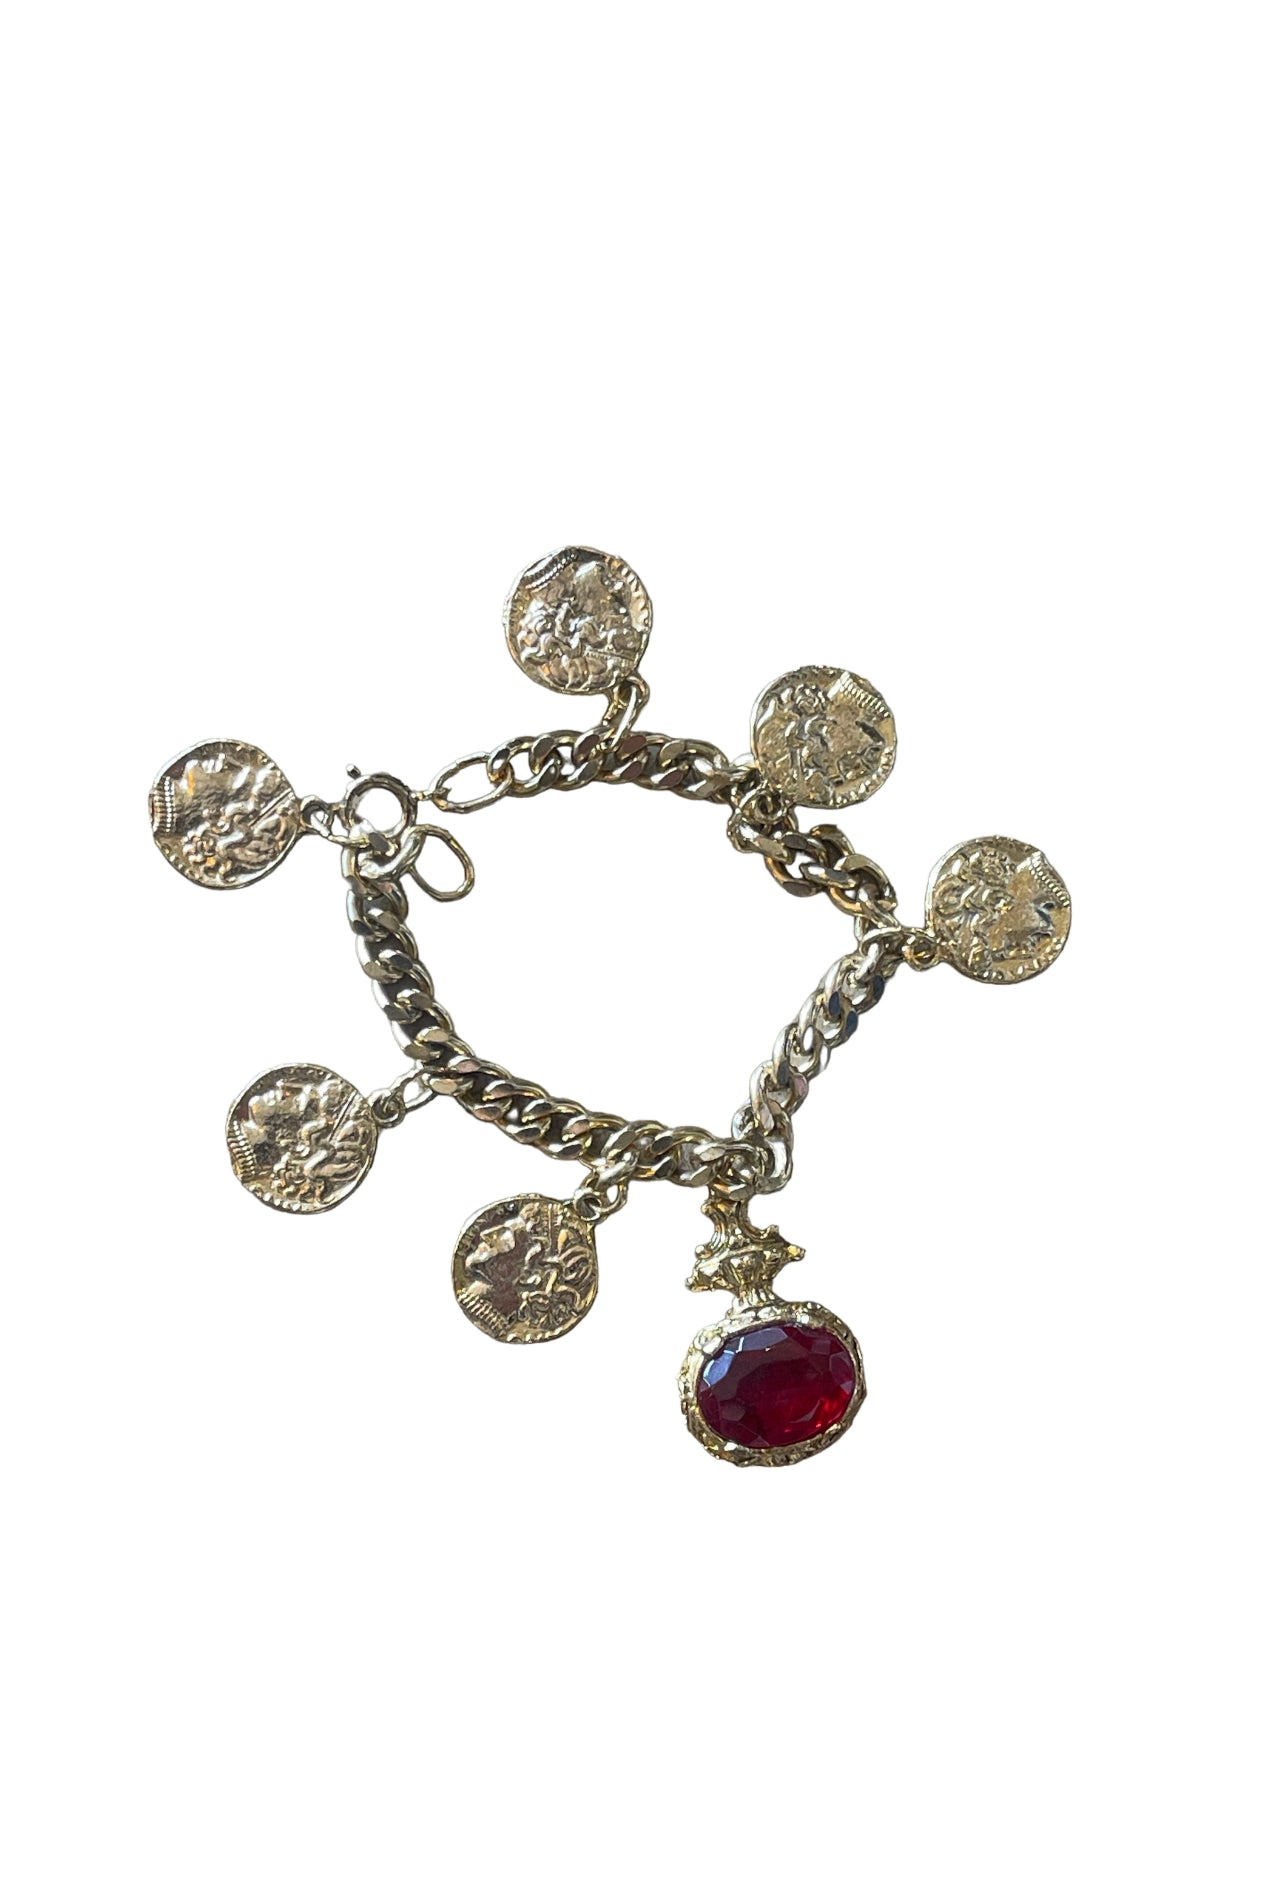 Susan Caplan Vintage Gold Charm Bracelet